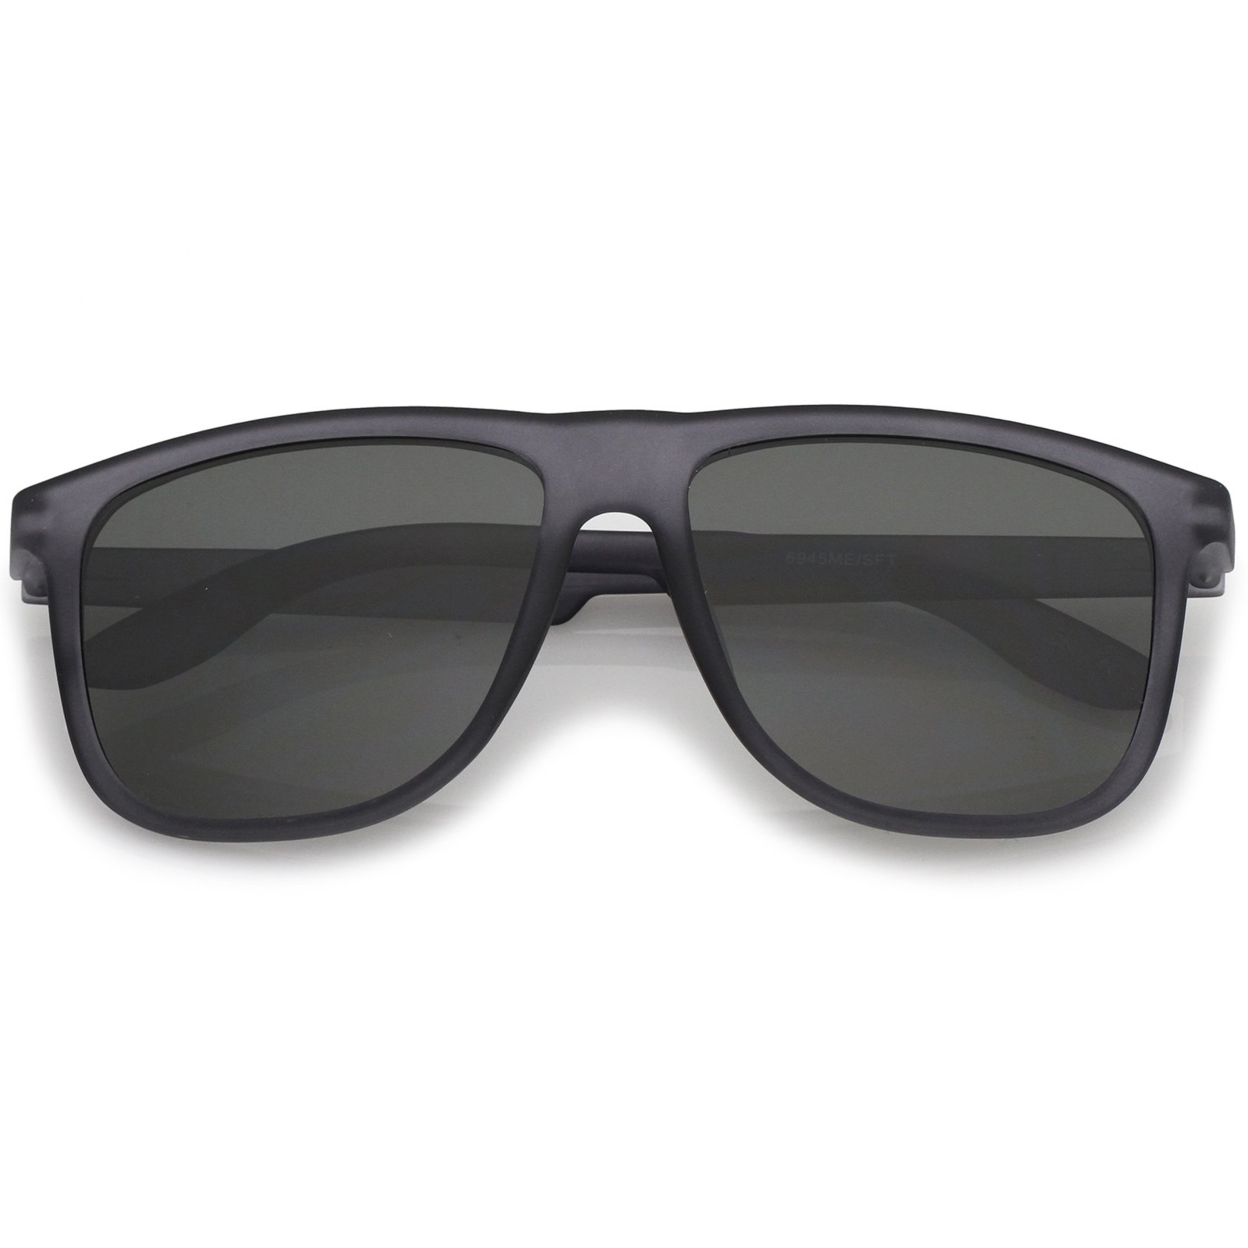 Lifestyle Rubberized Matte Finish Flat Top Square Sunglasses 55mm - Rubberized Black / Smoke